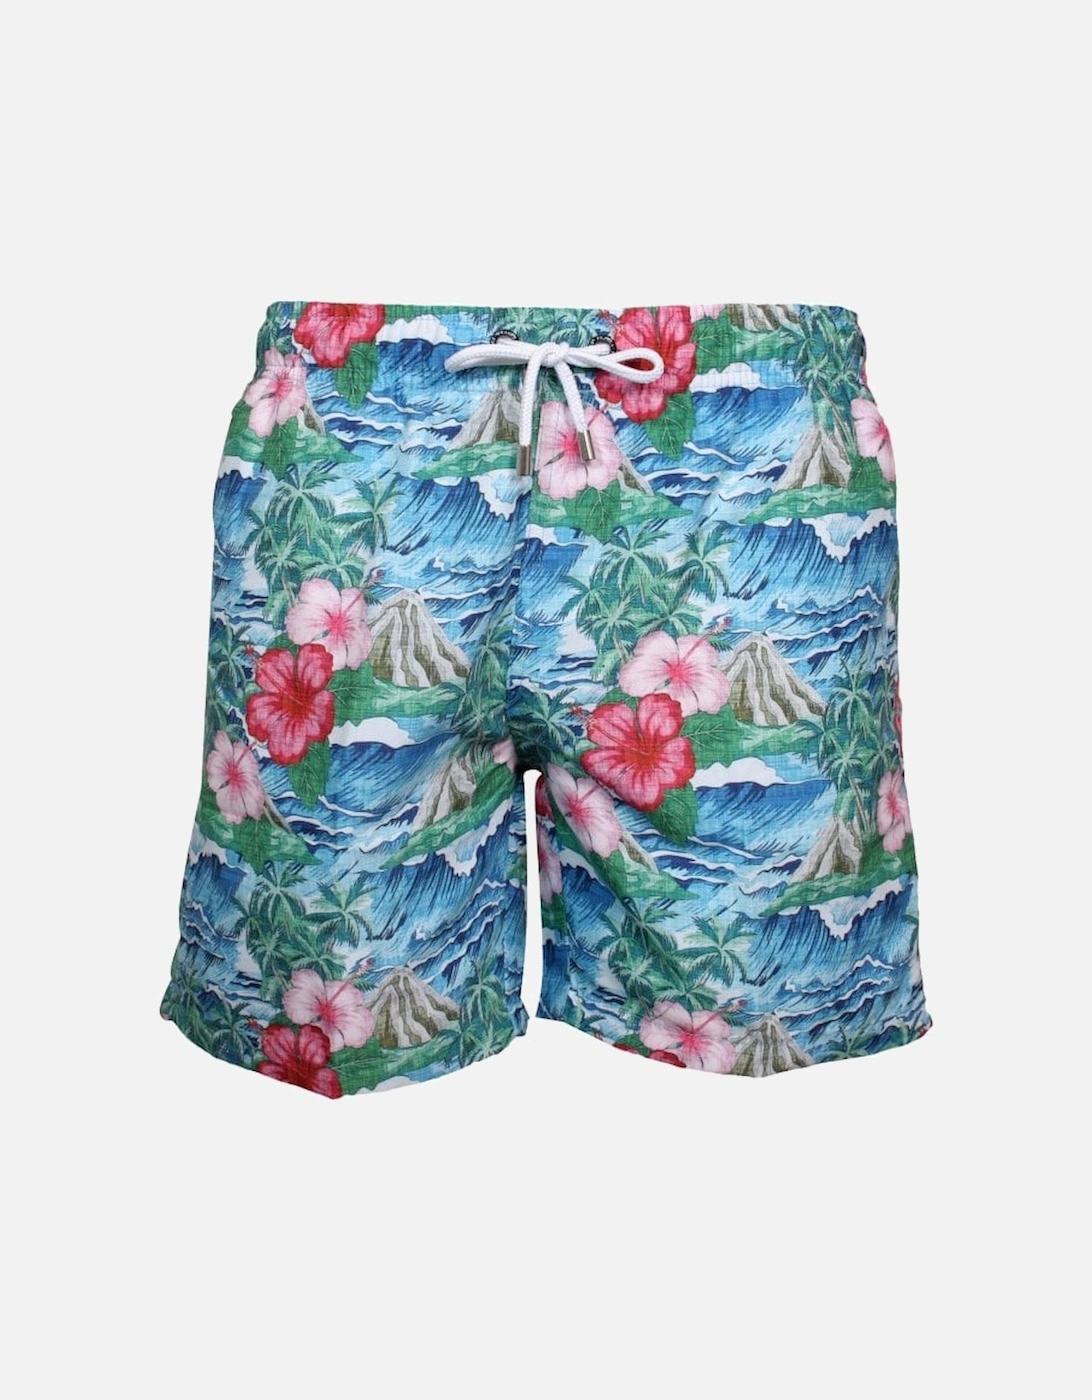 Oahu Floral Print Swim Shorts, Blue/Green/Pink, 5 of 4